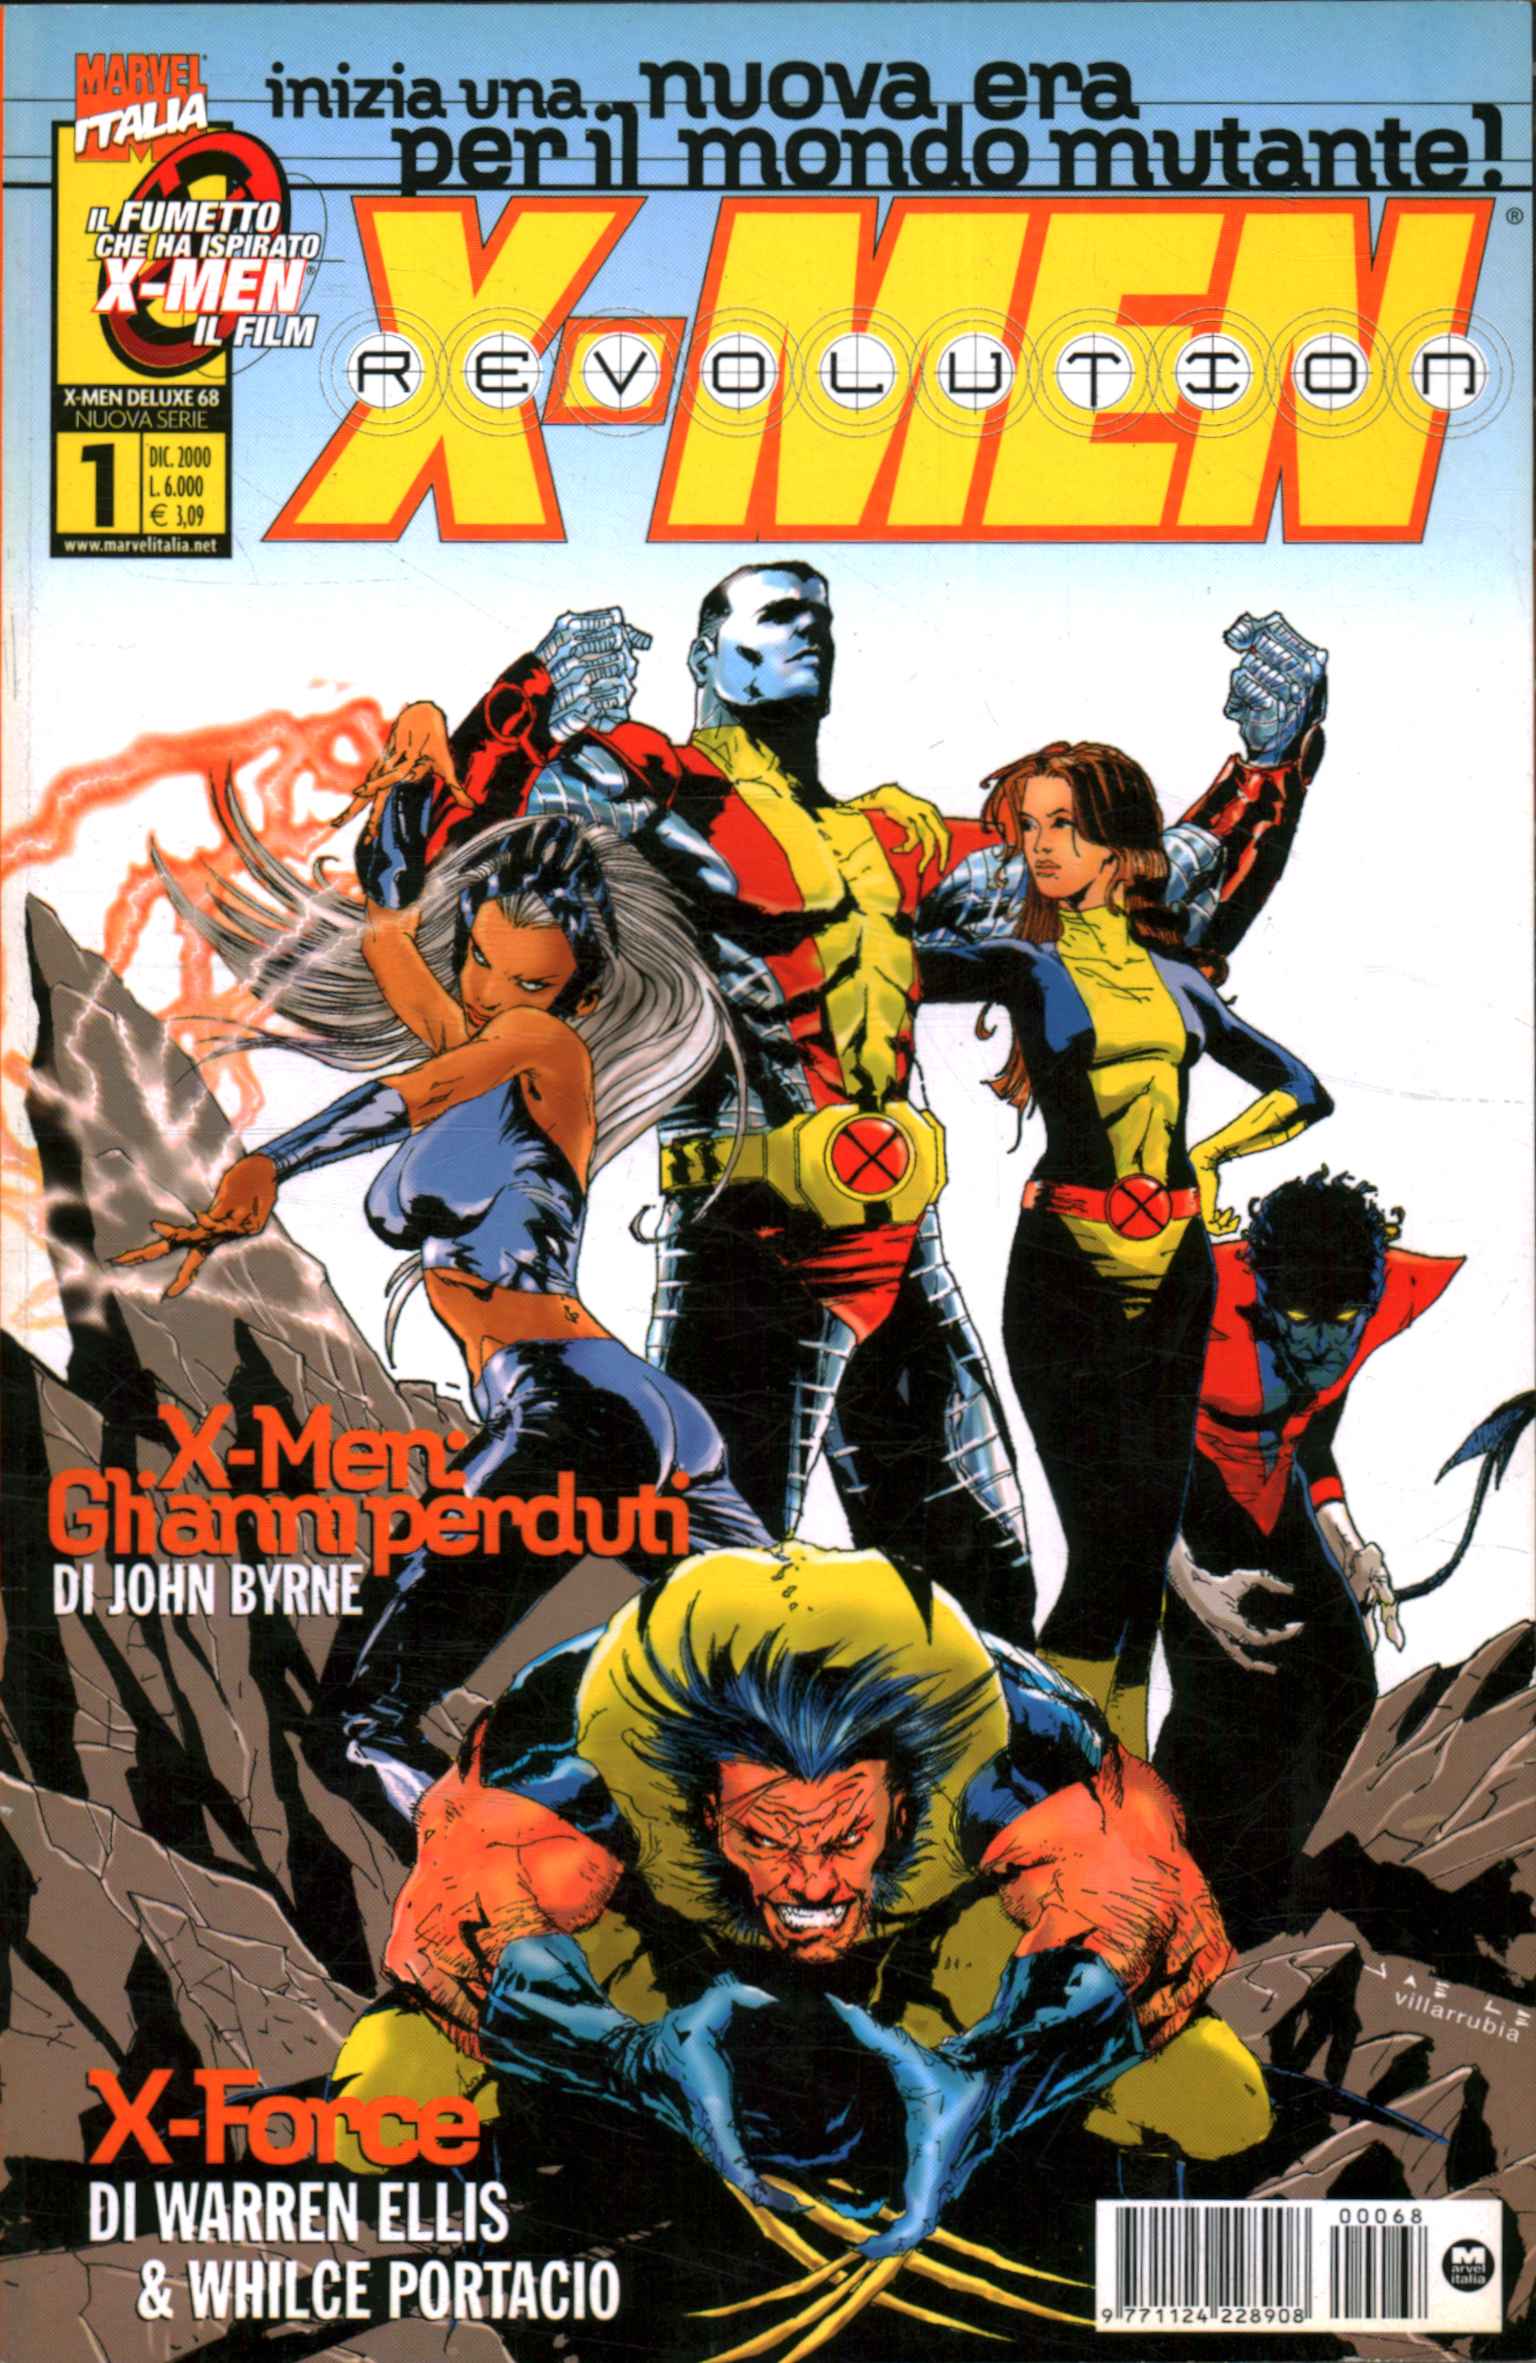 X-Men Revolution. Complete series (16 Vol